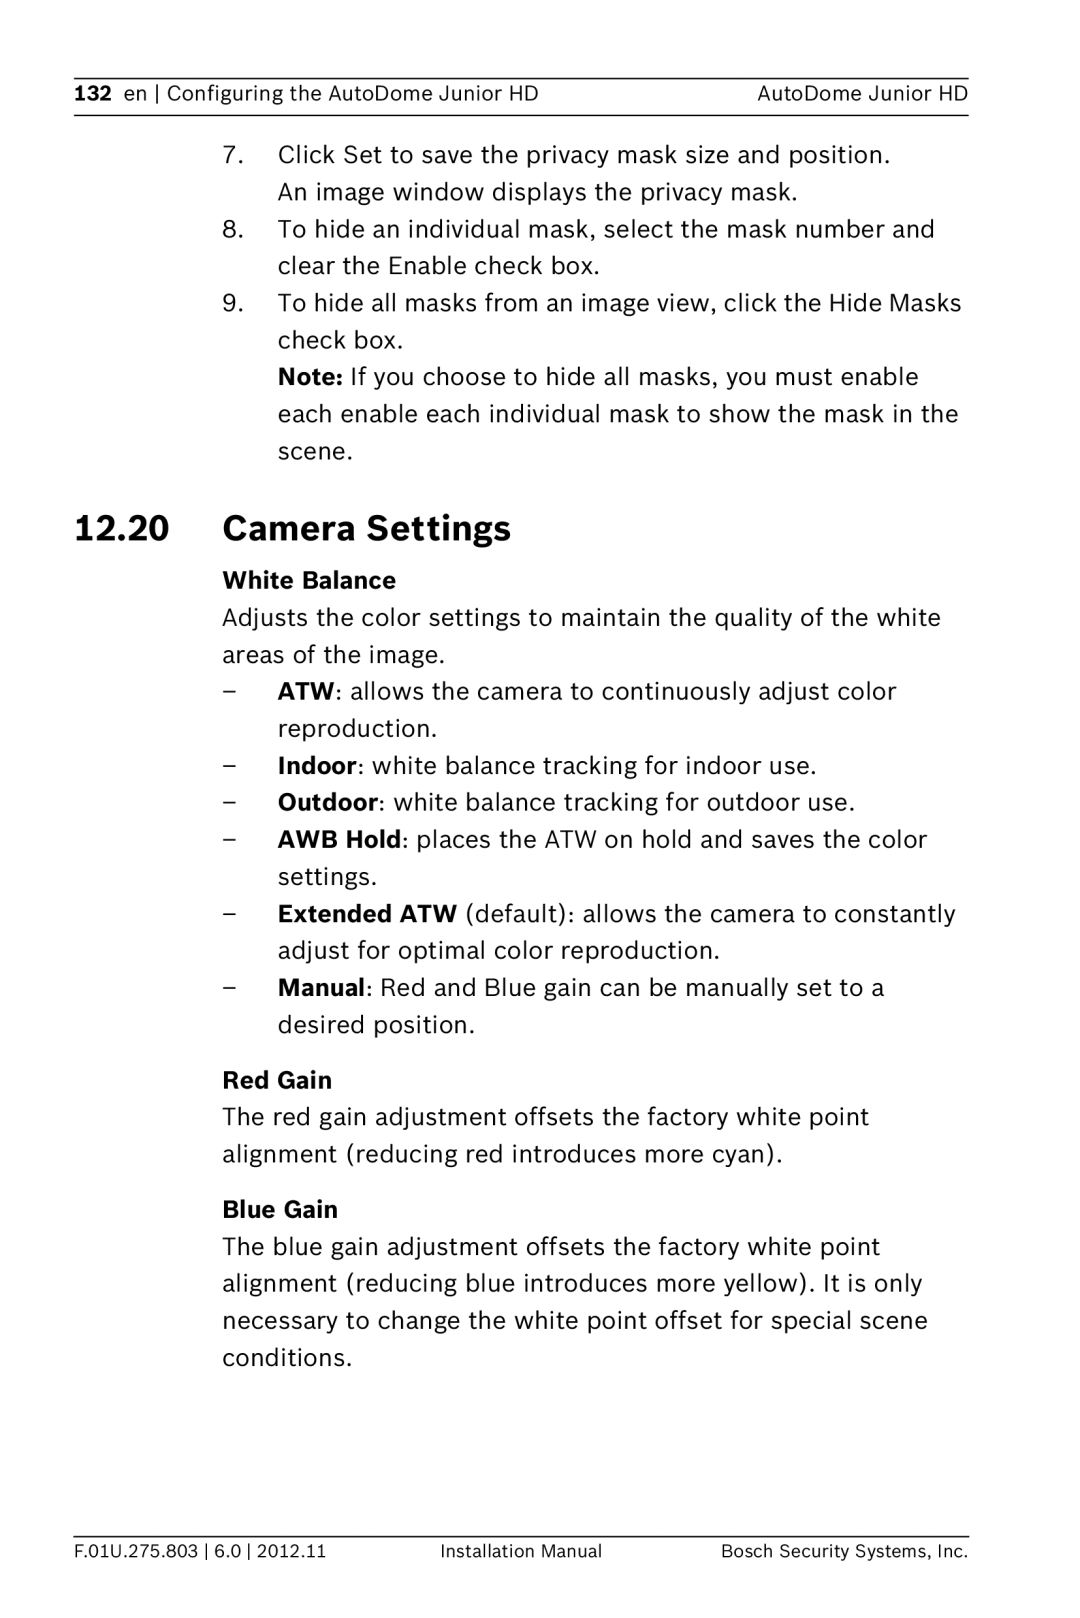 Bosch Appliances VJR SERIES installation manual Camera Settings, White Balance, Red Gain, Blue Gain 